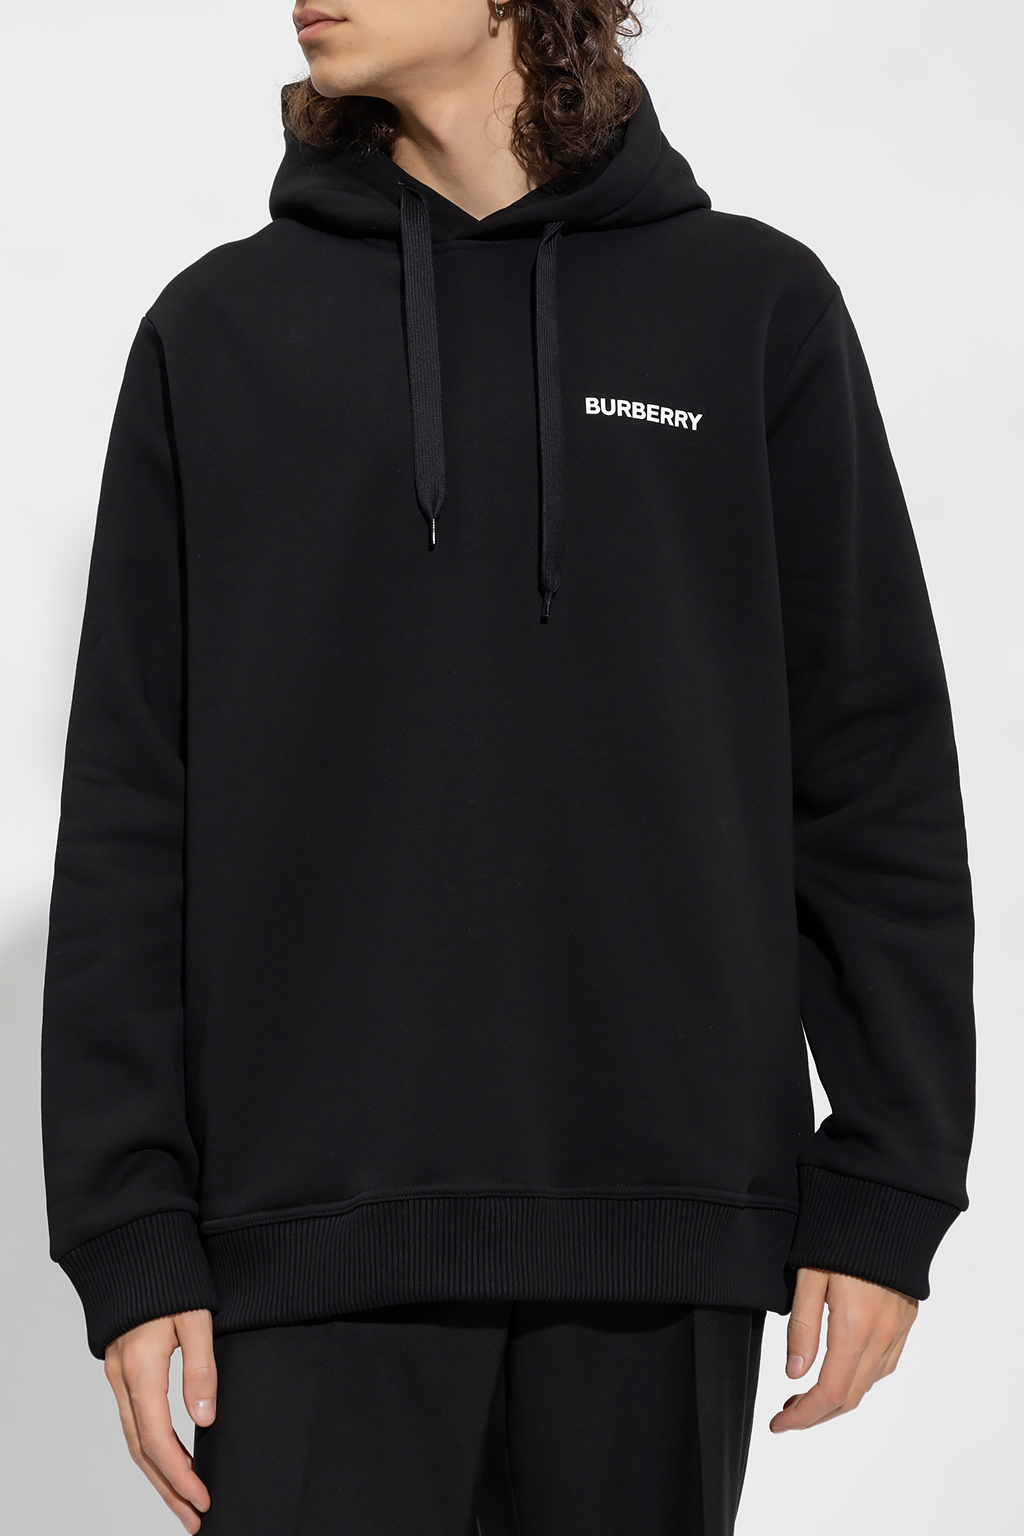 Burberry ‘Avondale’ hoodie